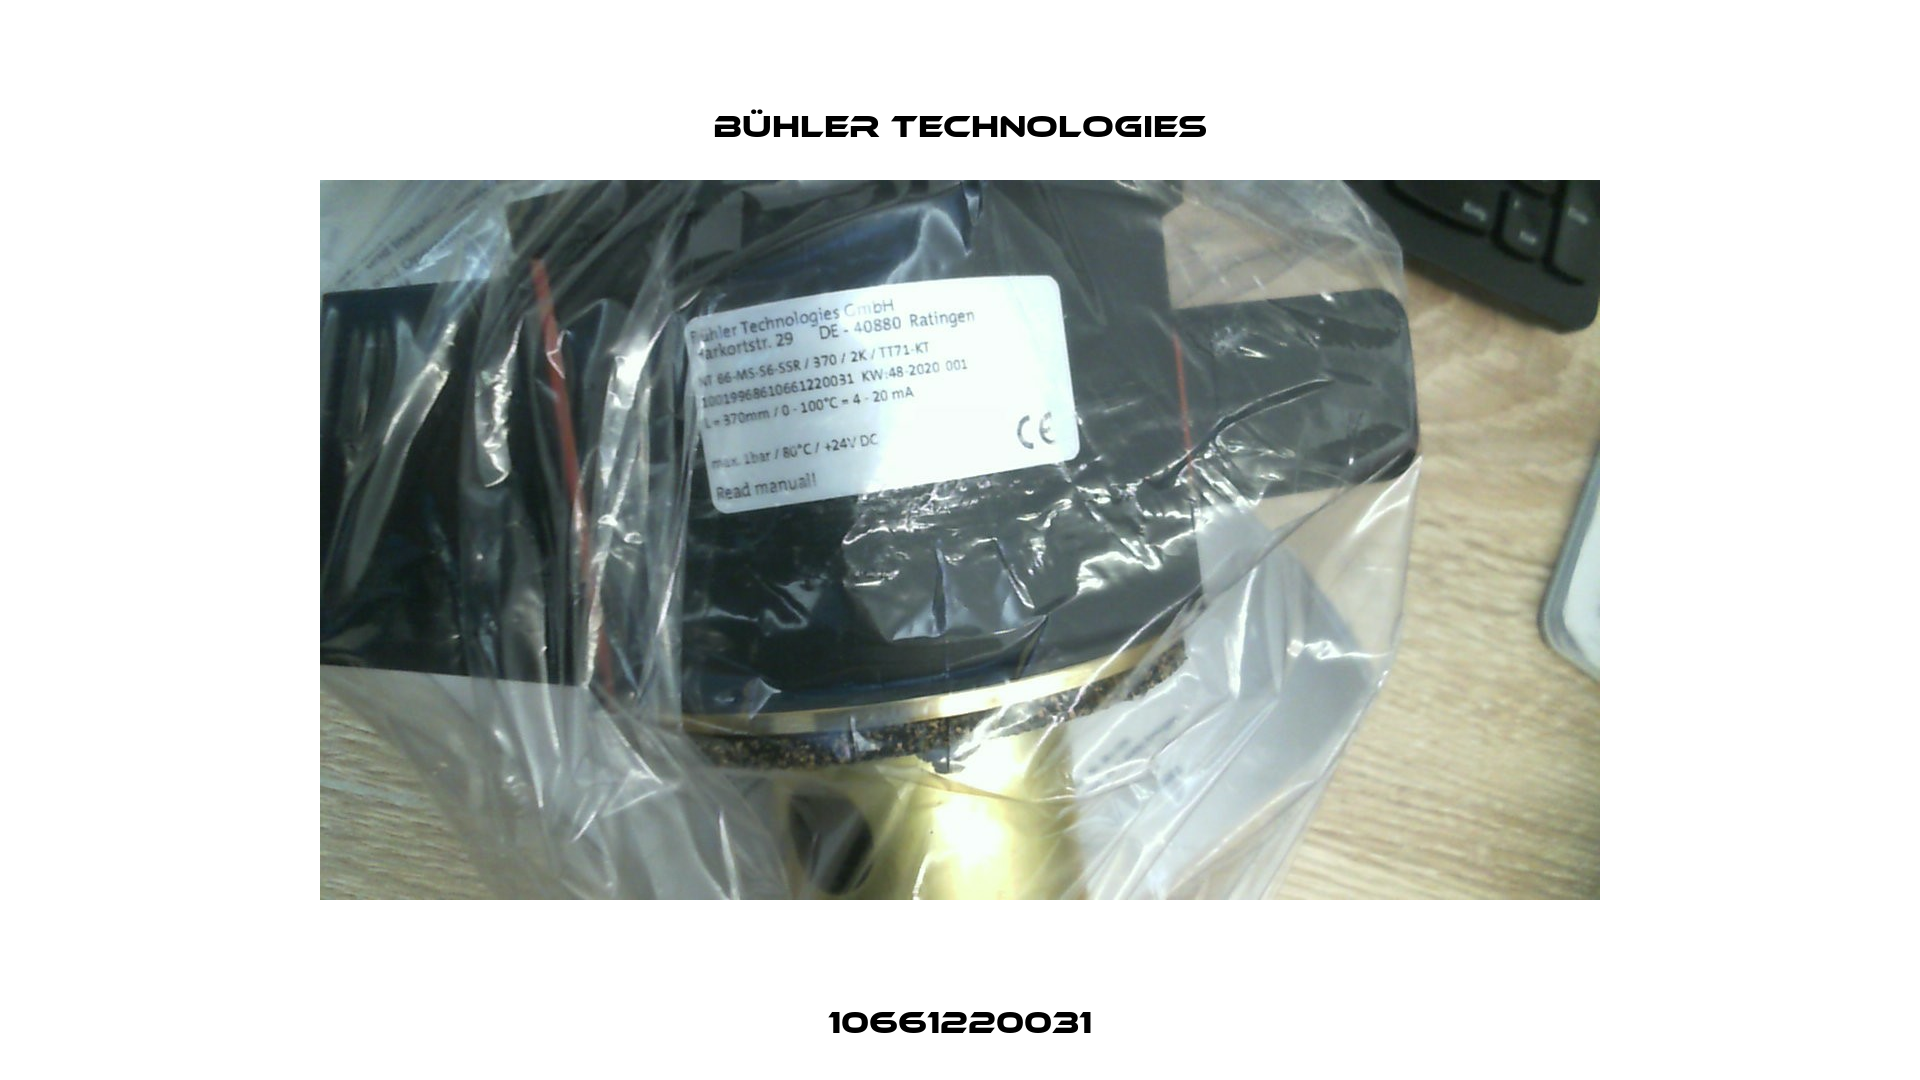 10661220031 Bühler Technologies